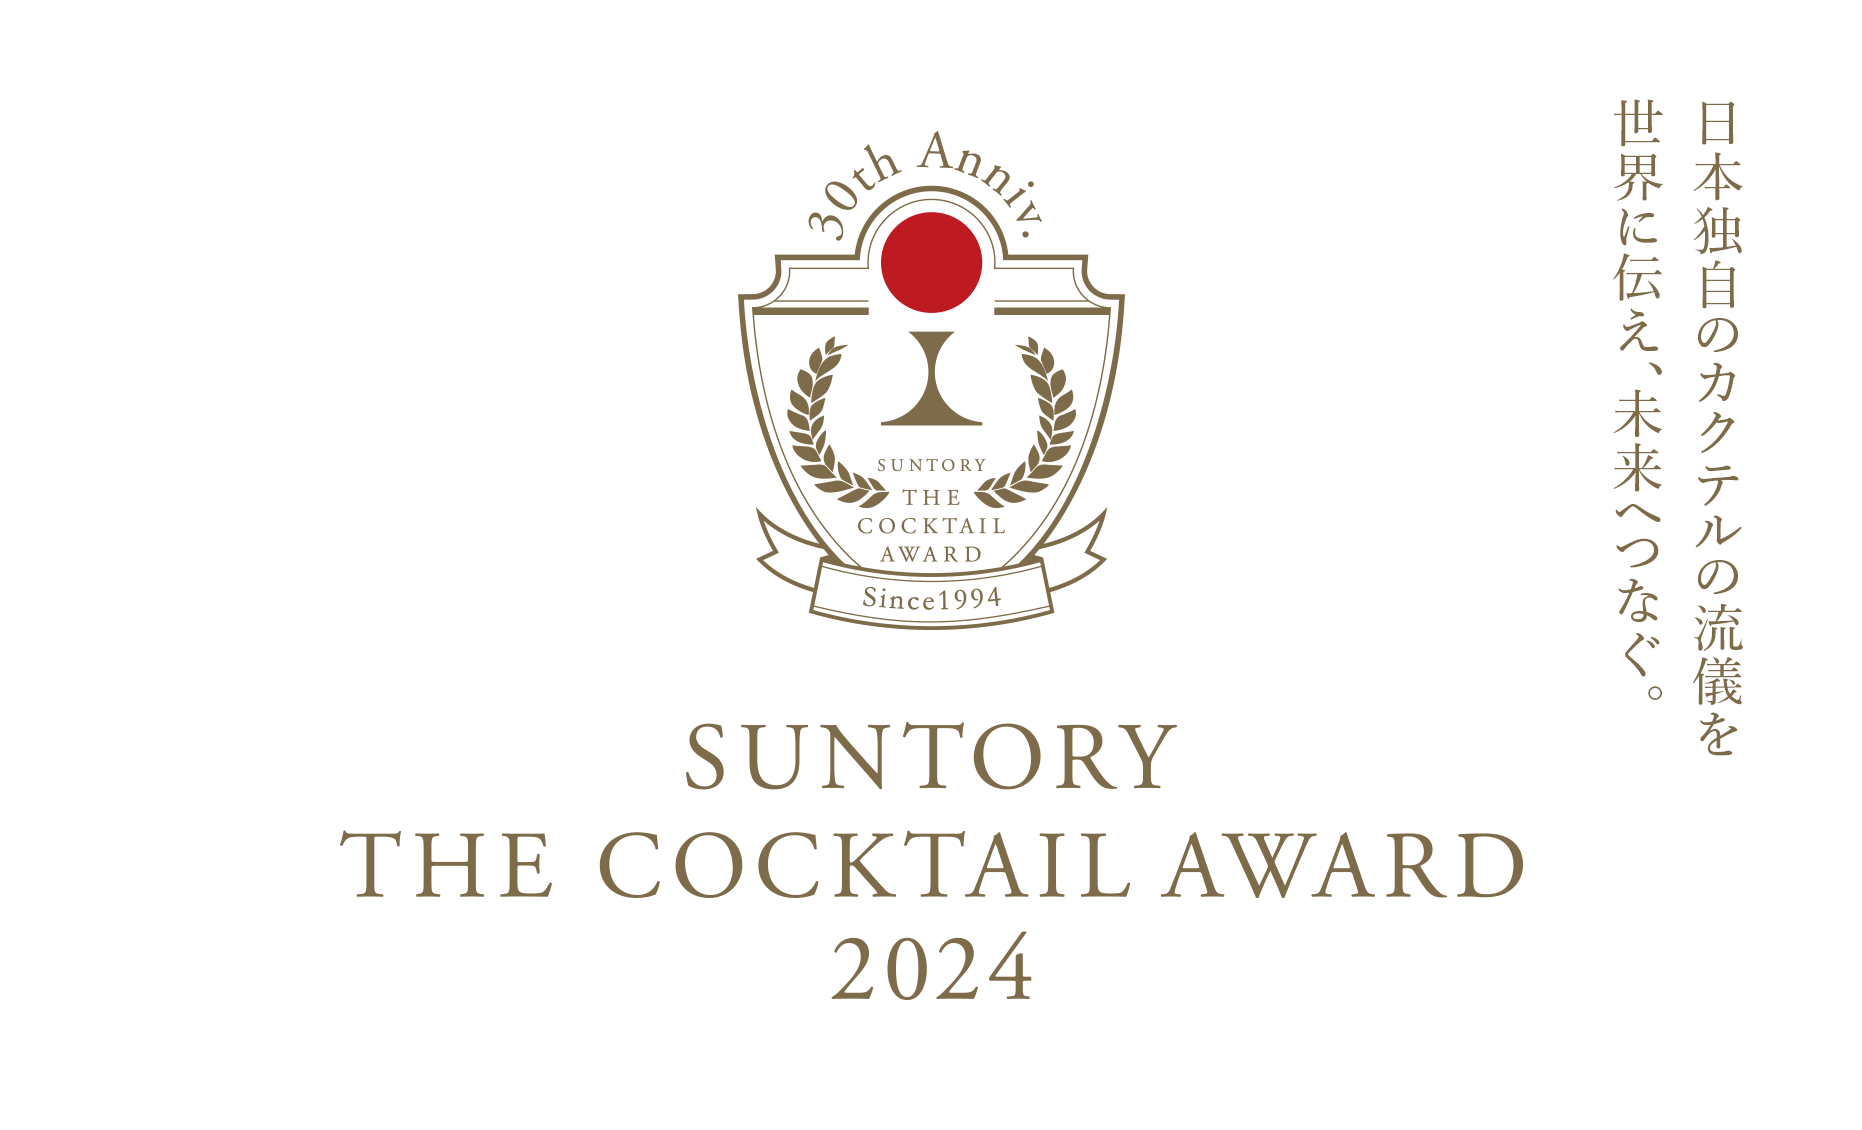 SUNTORY THE COCKTAIL AWARD 2024 日本独自のカクテルの流儀を世界に伝え、未来へつなぐ。